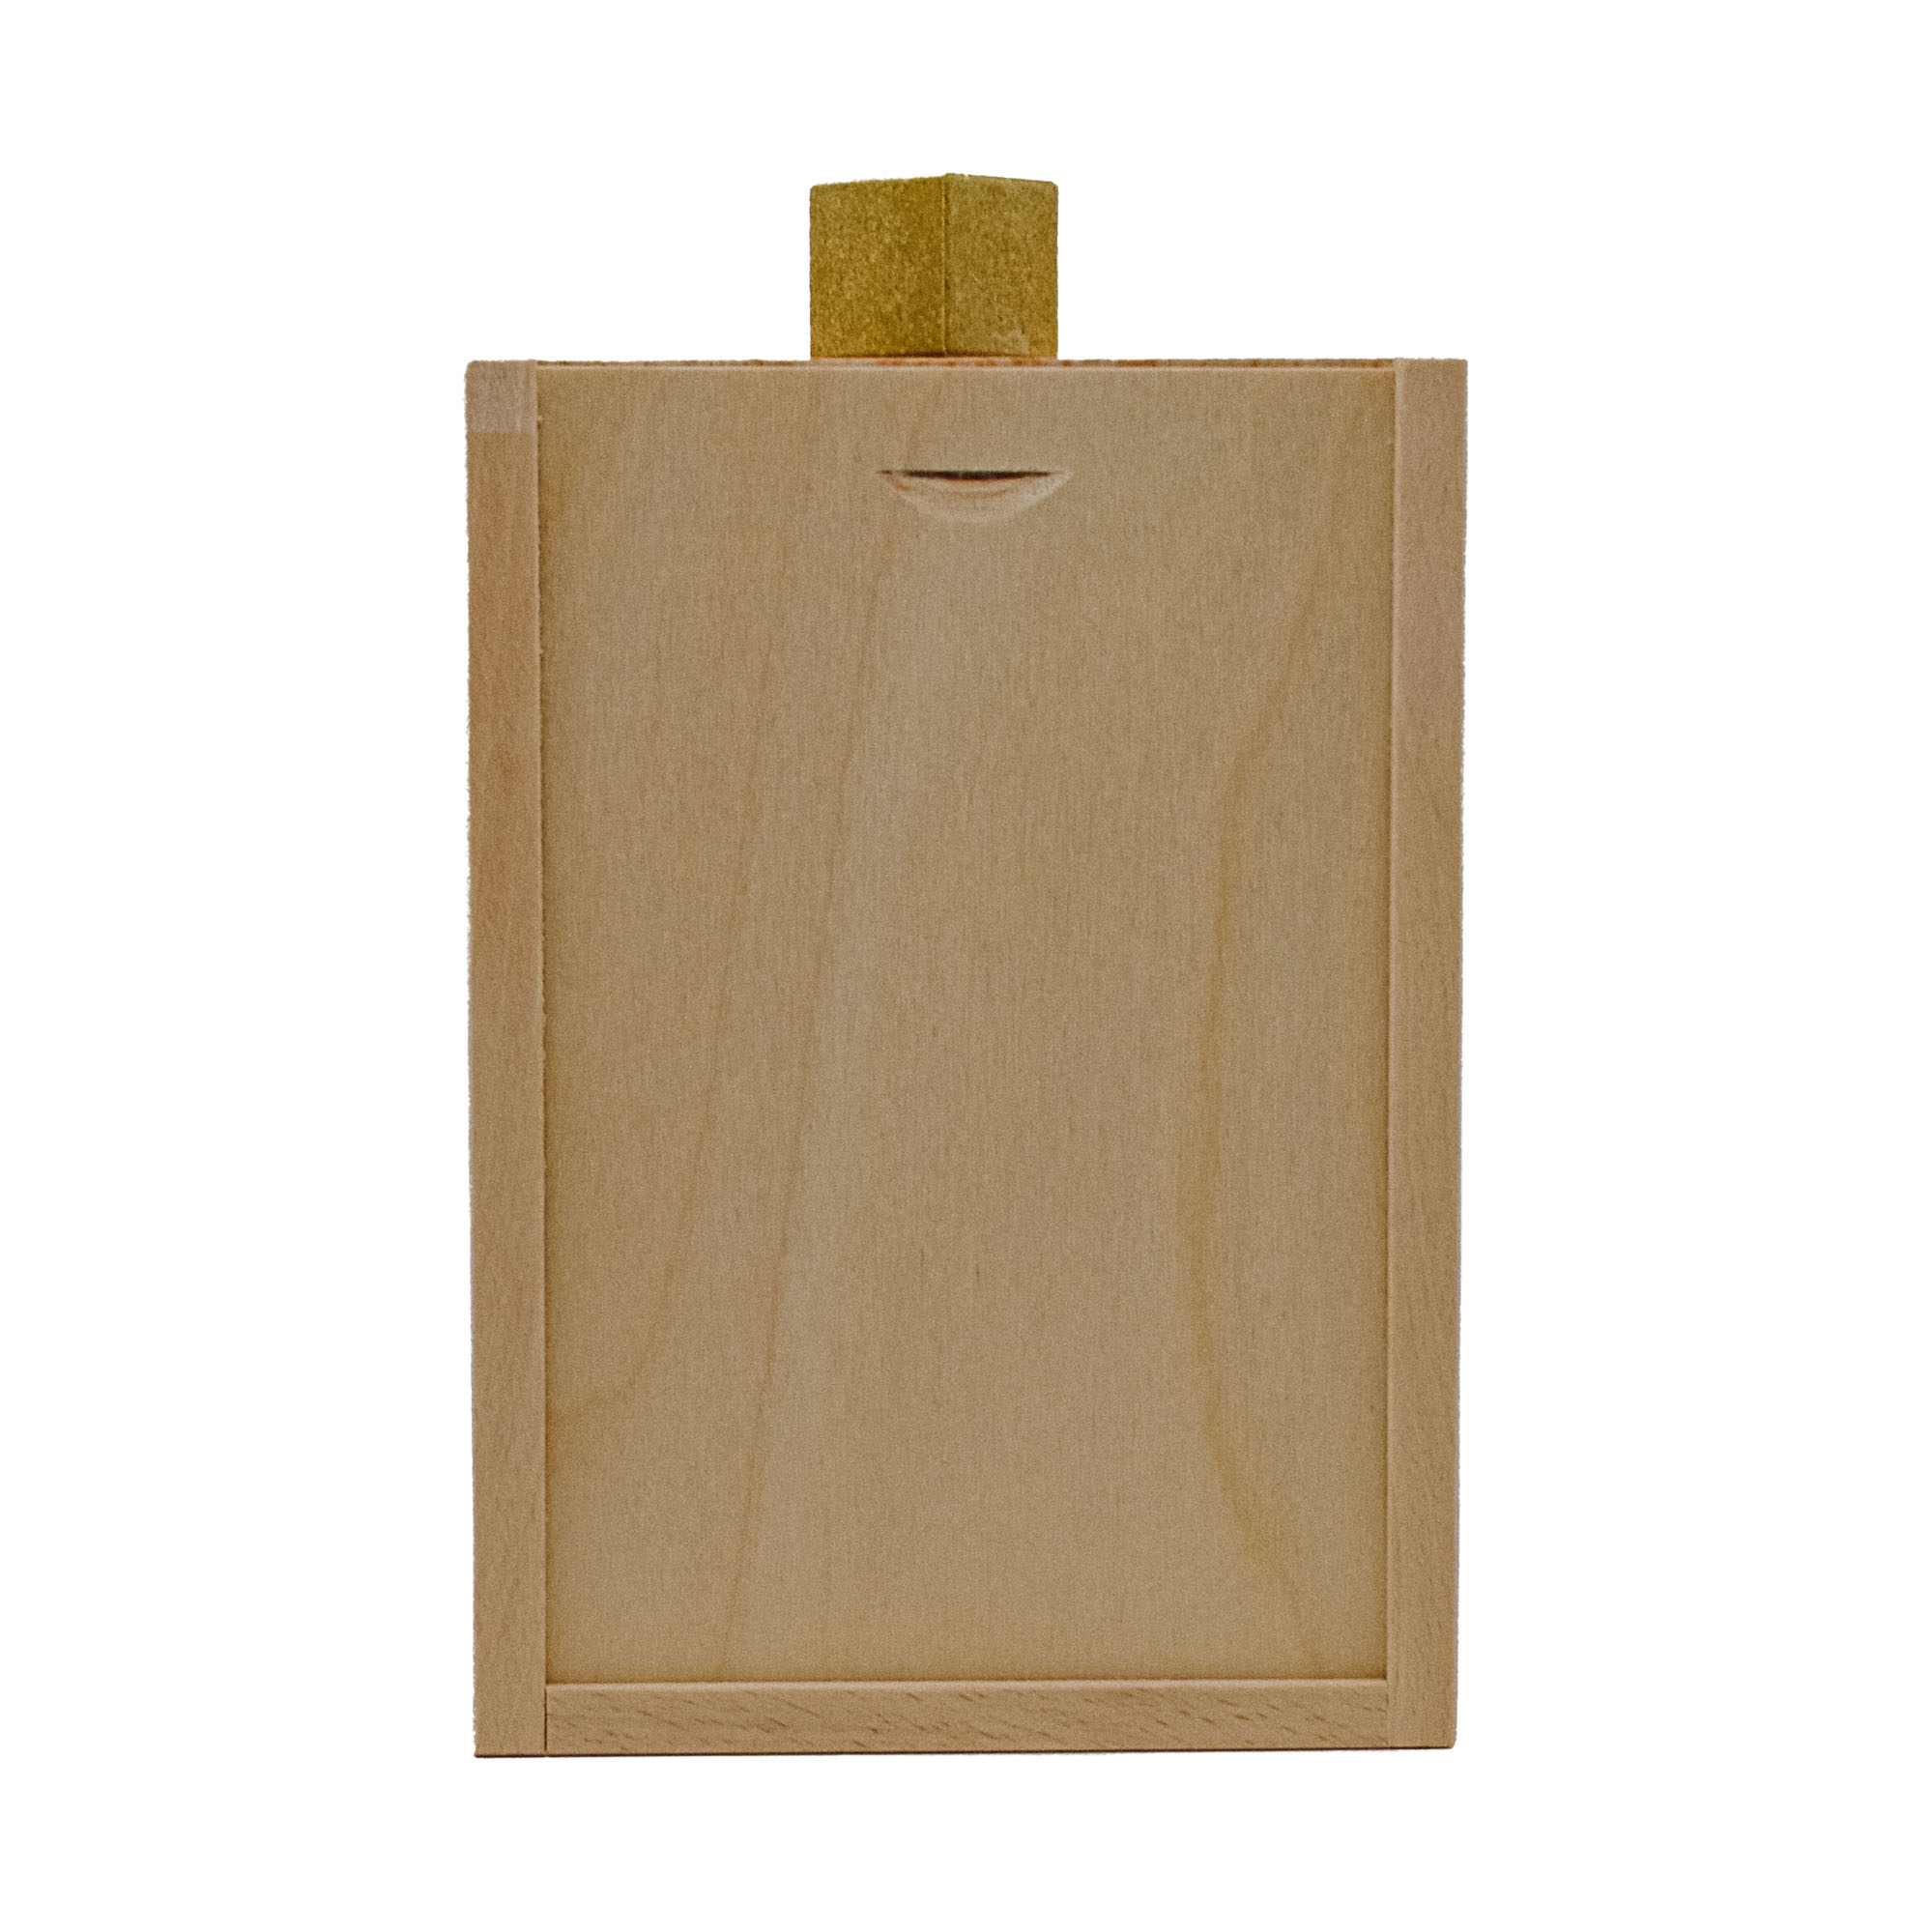 Anker Holzkasten Nr. 2 (19 x 13,4 x 4,5 cm) neutral